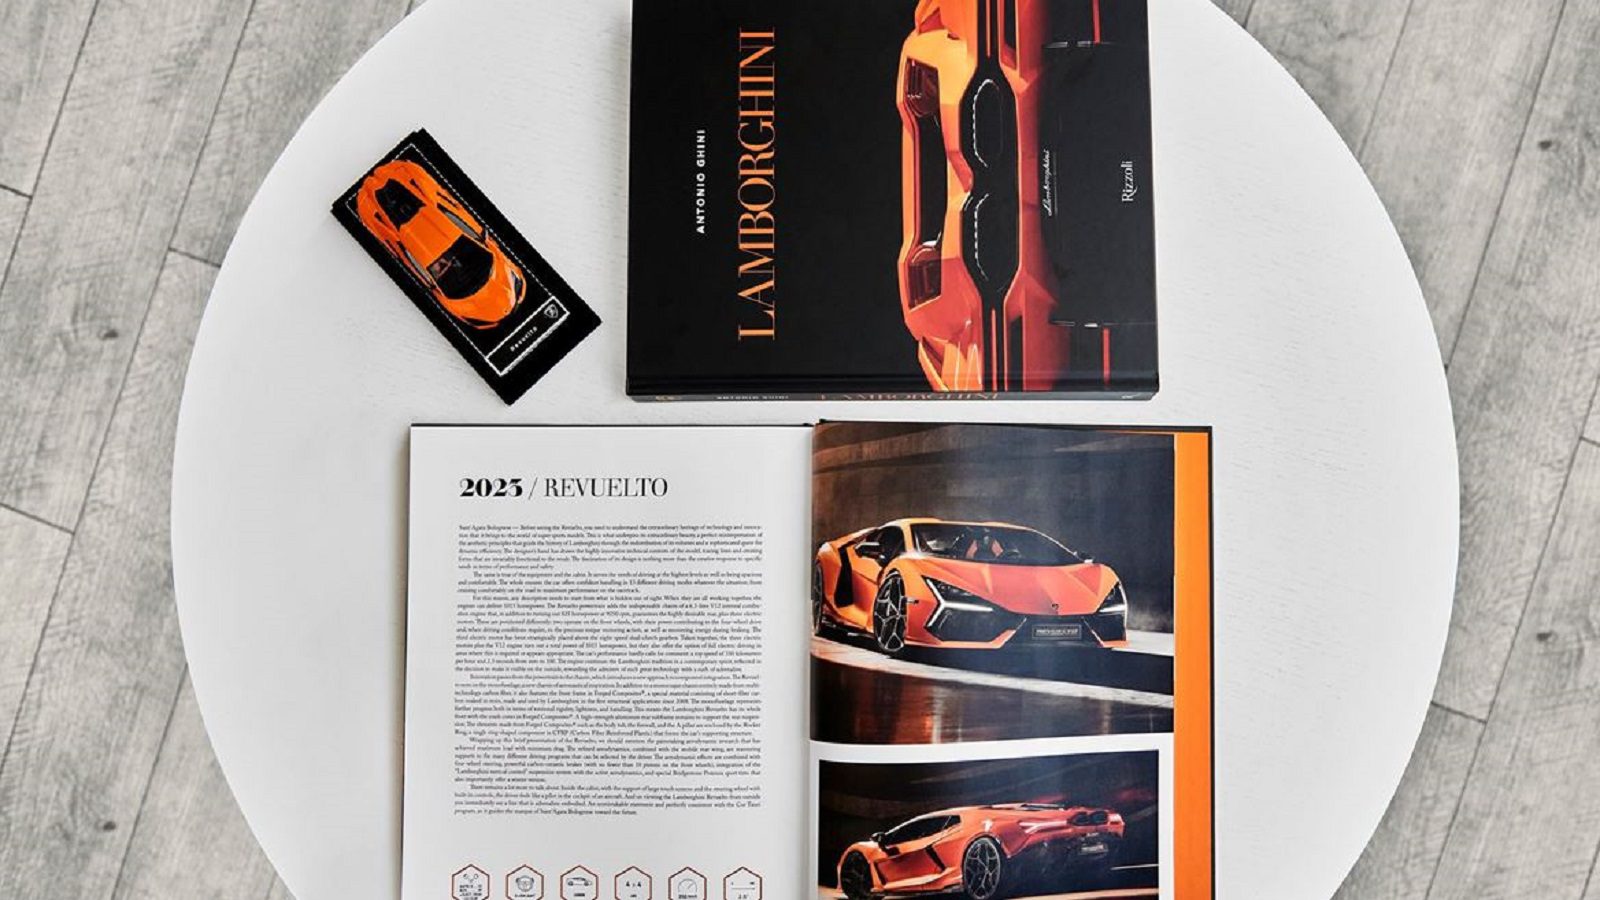 Lamborghini, Automobili Lamborghini, Stephan Winkelmann, libro, Antonio Ghini